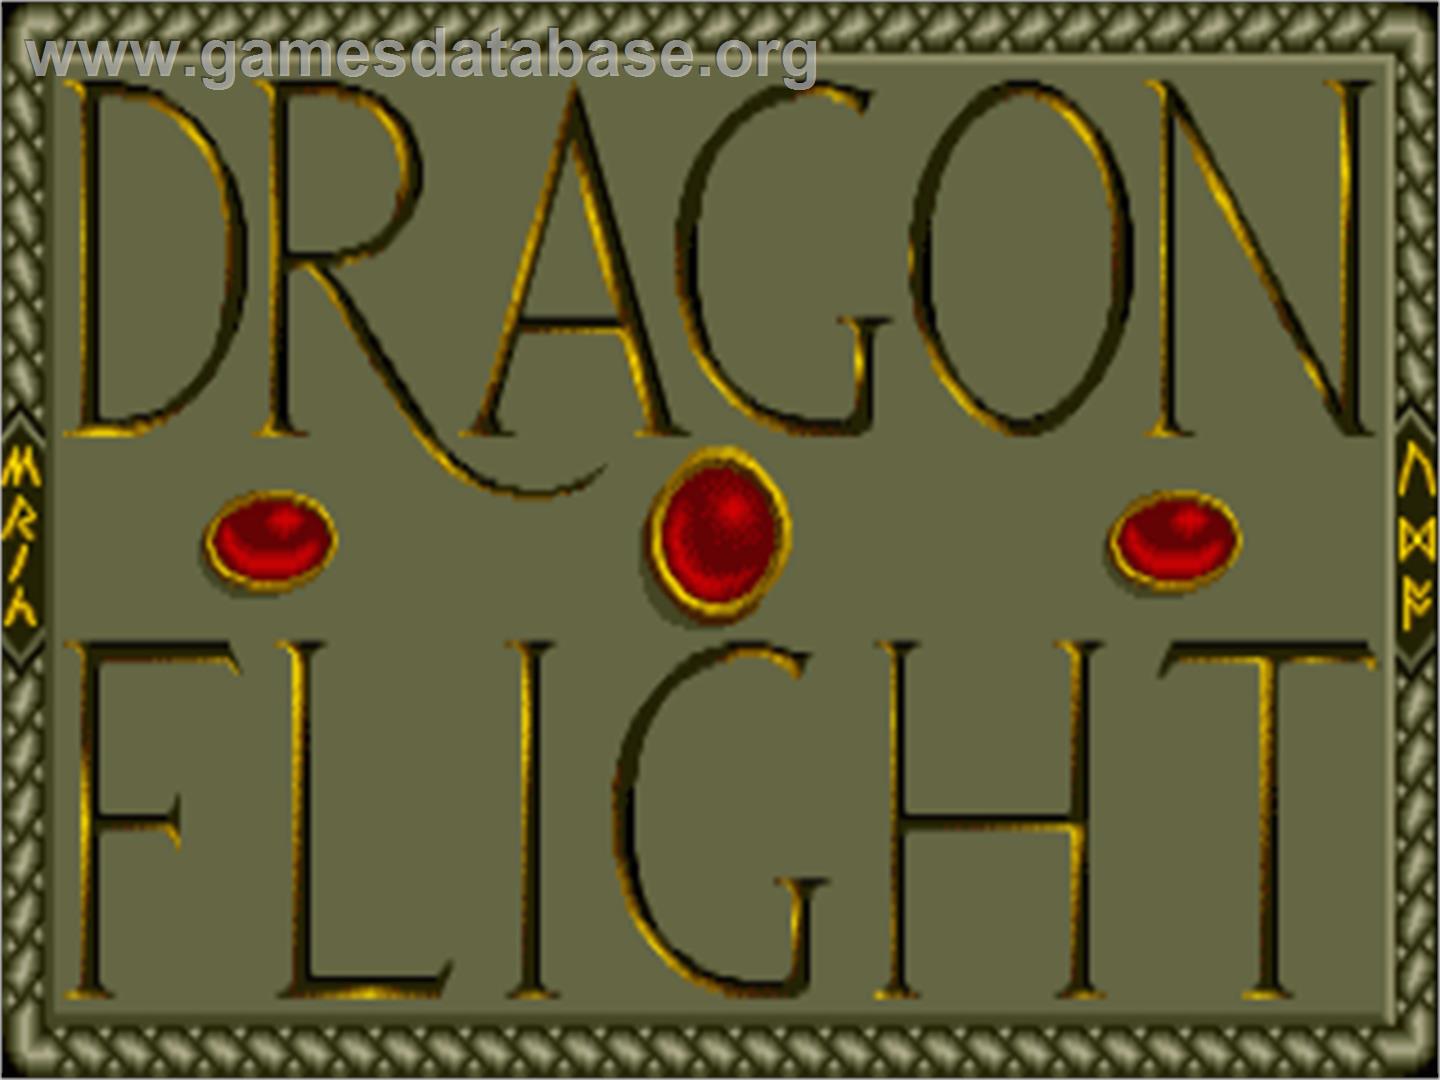 Dragonflight - Commodore Amiga - Artwork - Title Screen